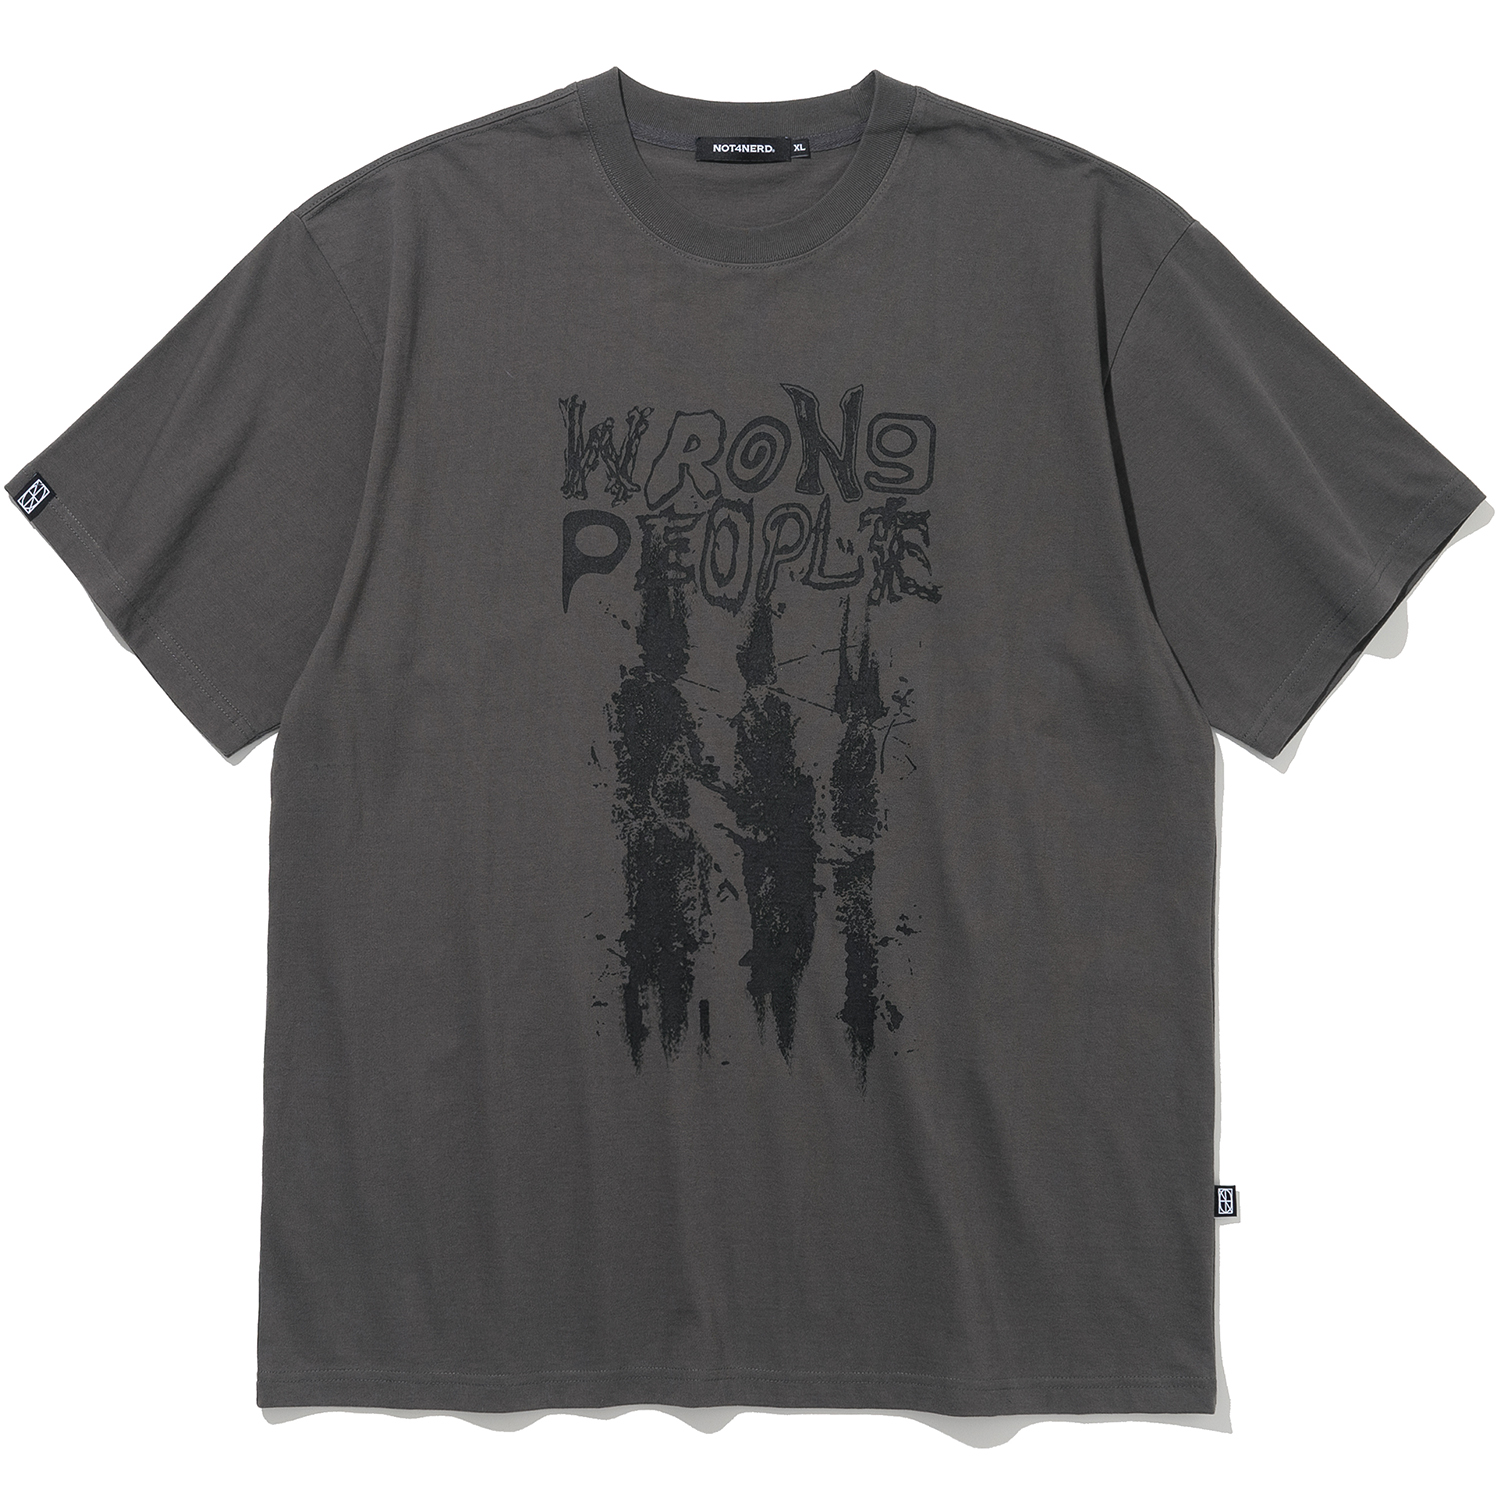 Wrong People T-Shirts - Dark Grey,NOT4NERD